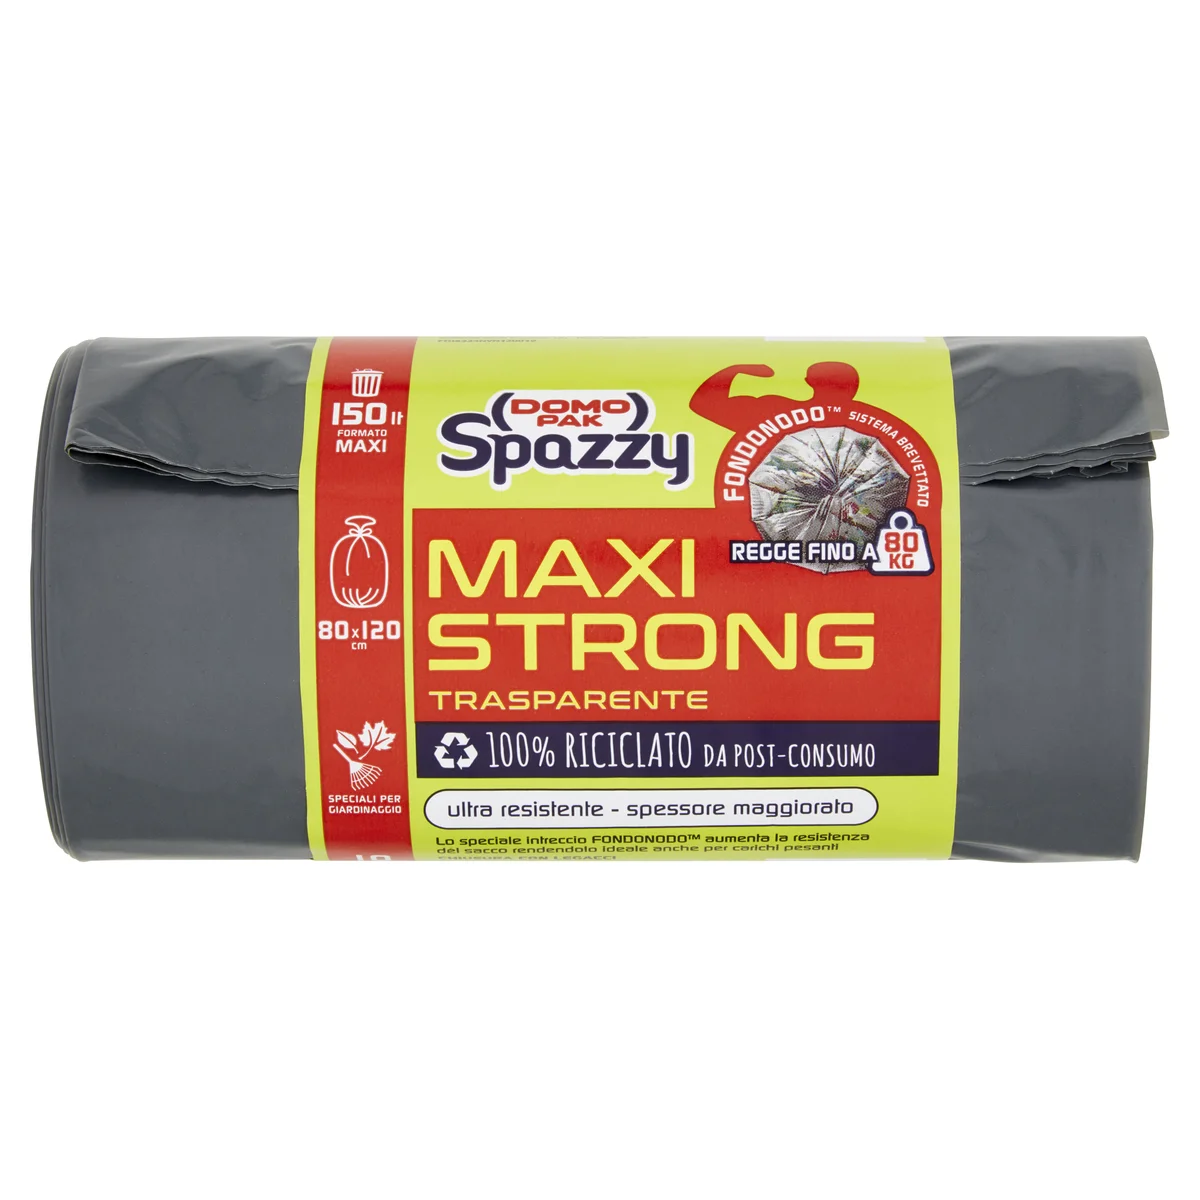 Domopak Spazzy Maxi Strong Trasparente 150 lt 80x120 cm 10 pz